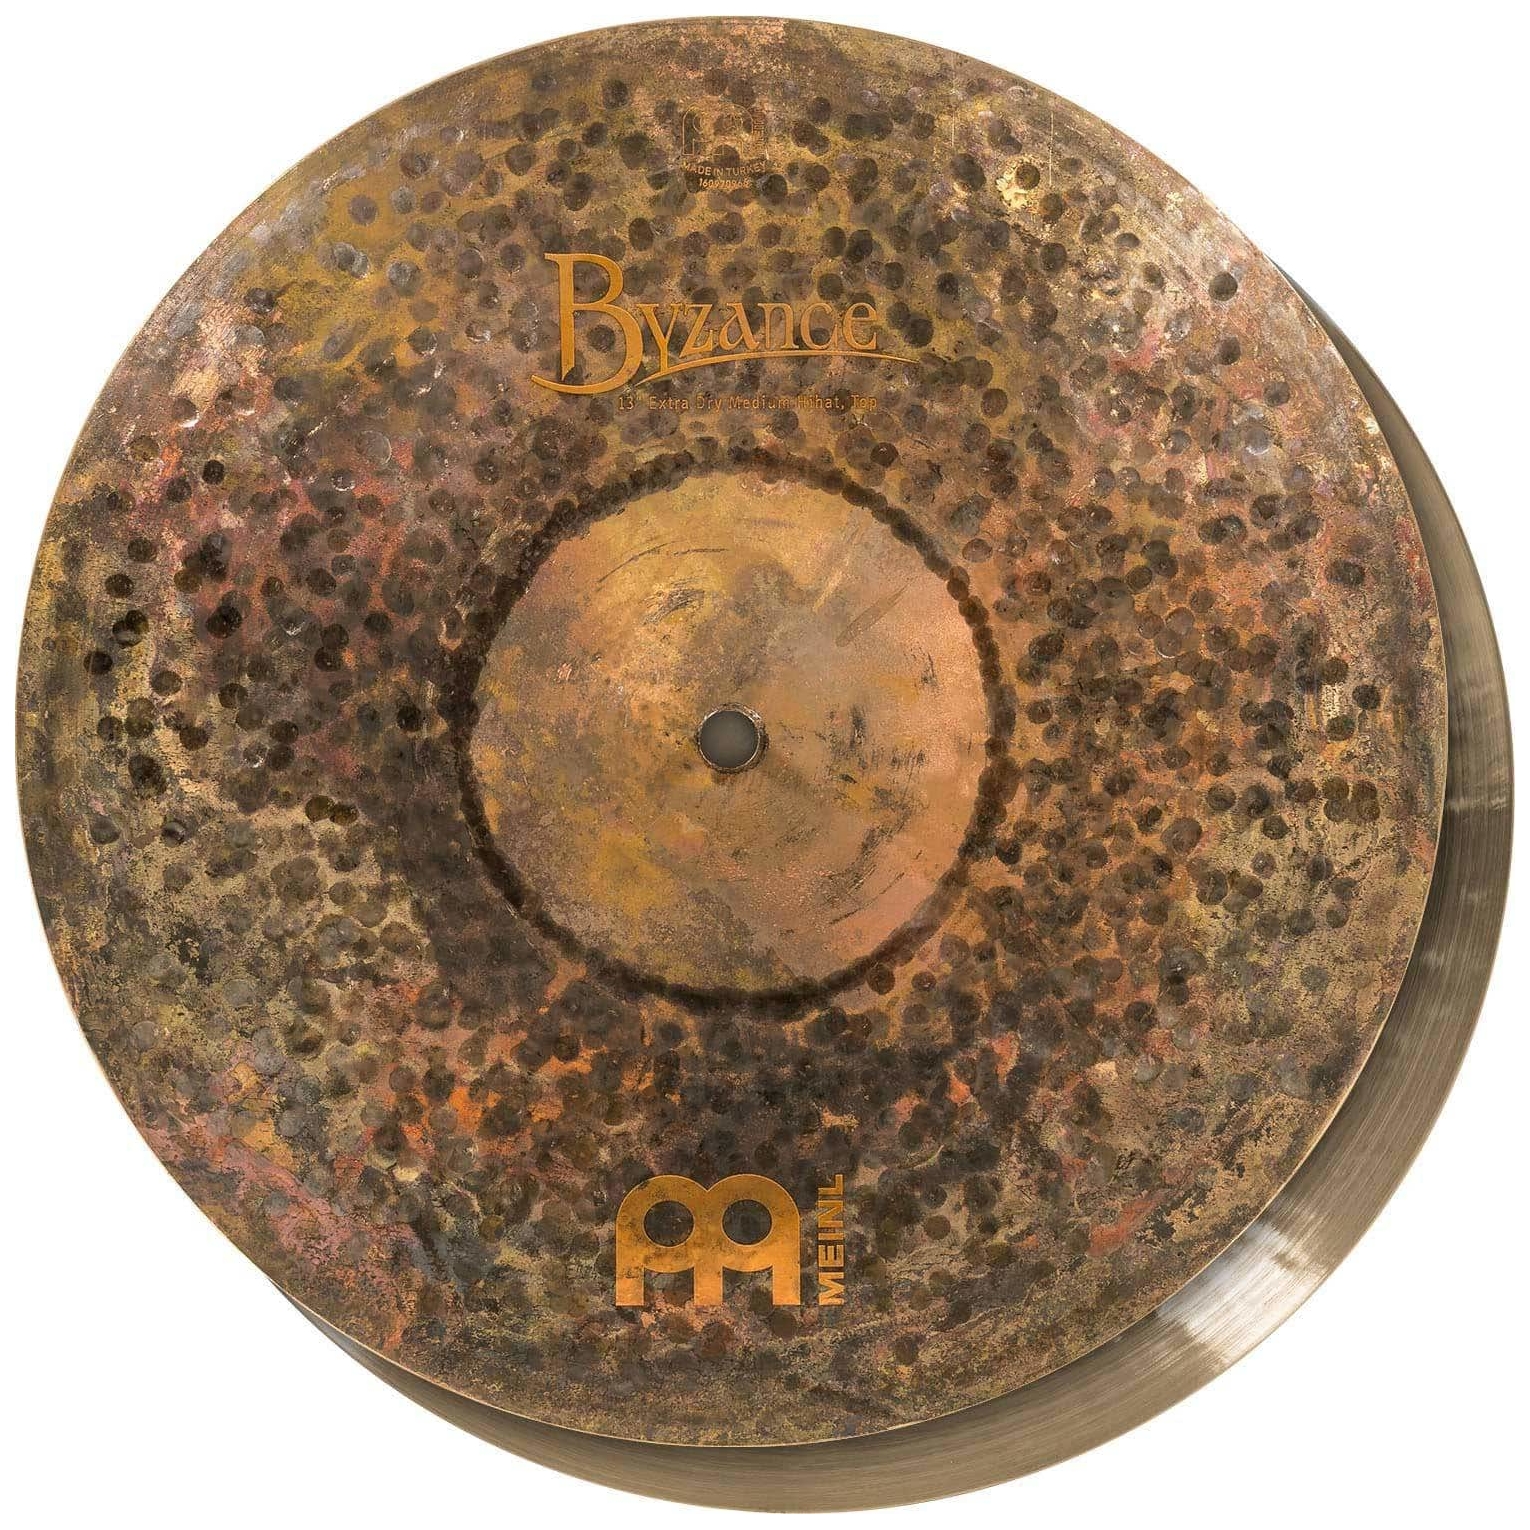 Meinl Cymbals B13EDMH - 13" Byzance Extra Dry Medium Hihat 